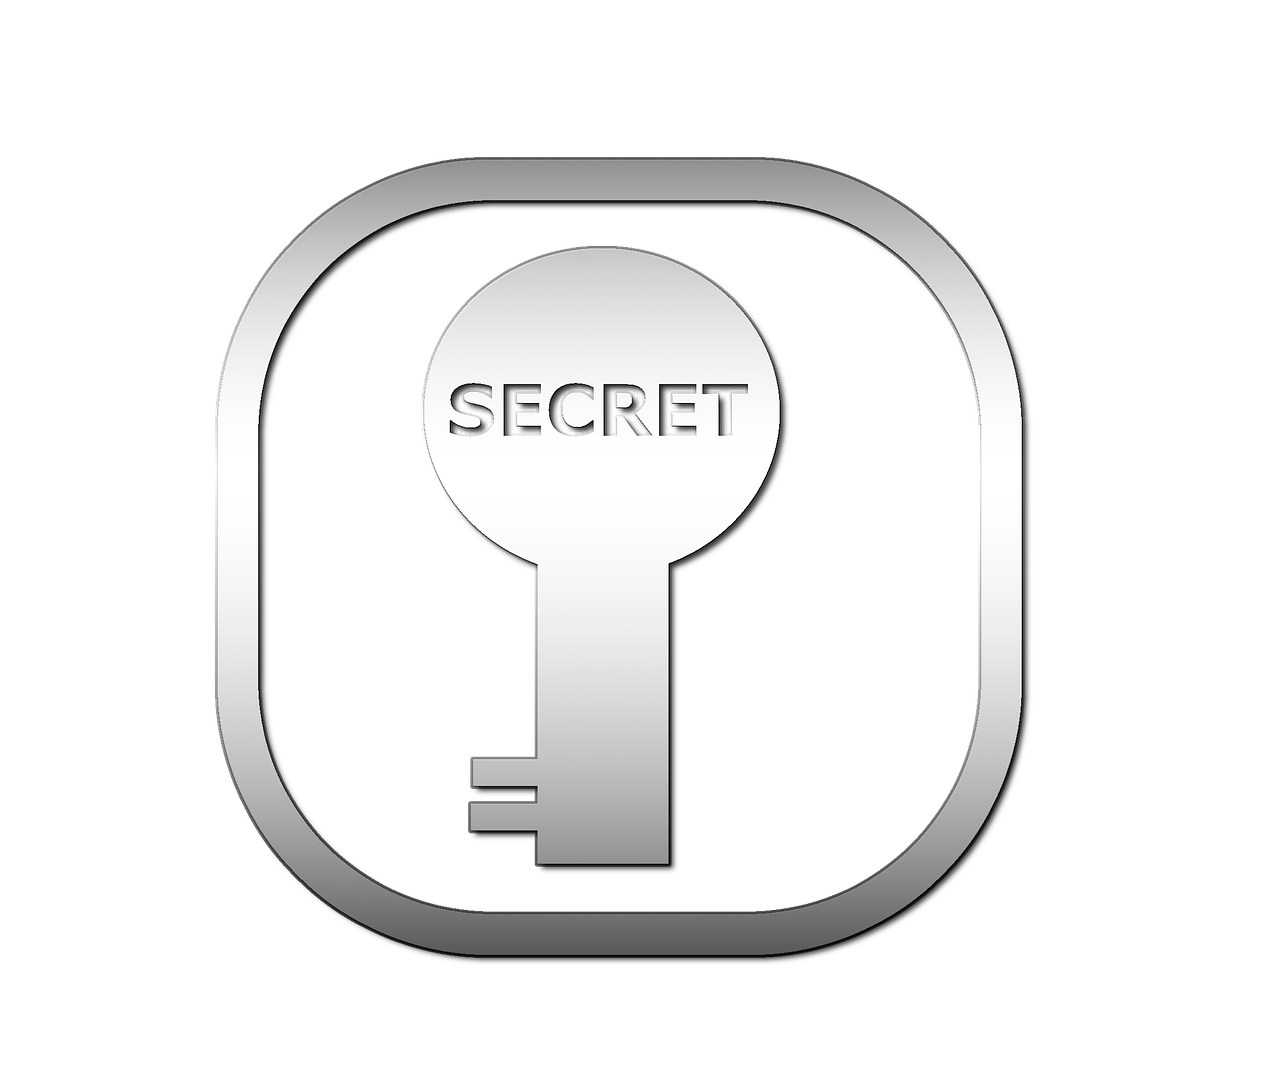 secret keyhole open free photo